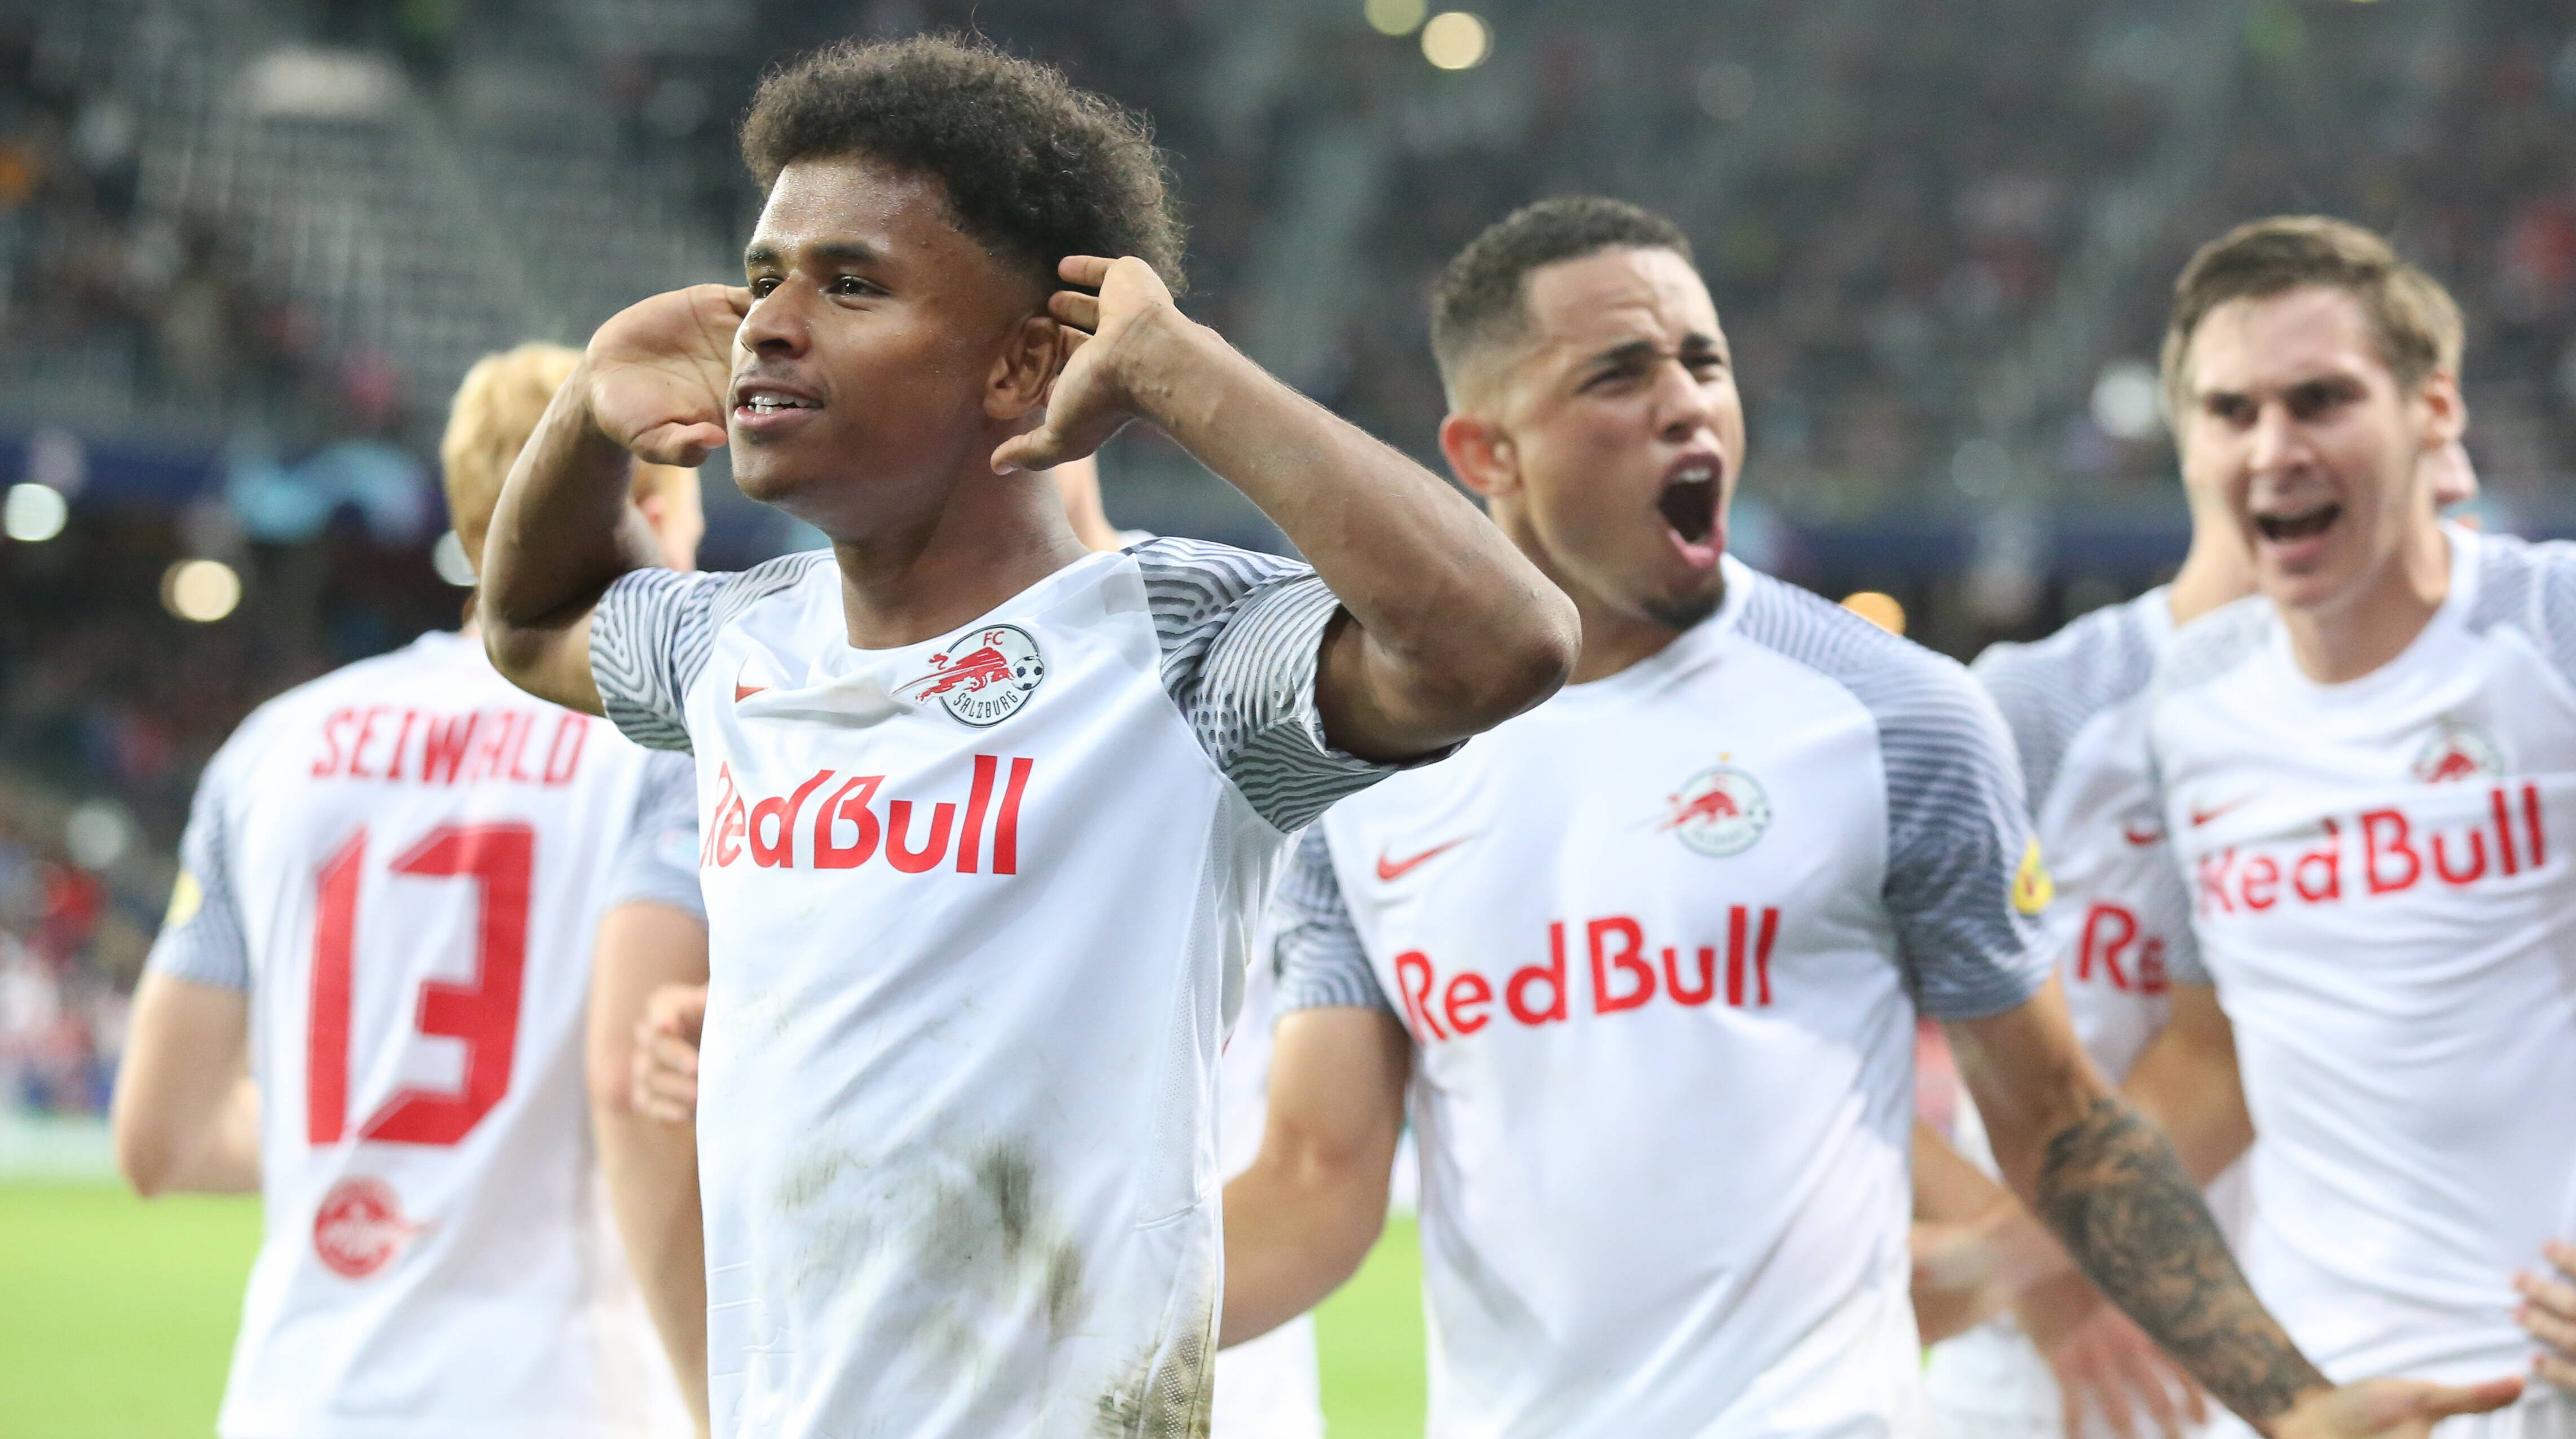 Adeyemi set to join BVB - Transfer poker with Red Bull Salzburg |  Transfermarkt